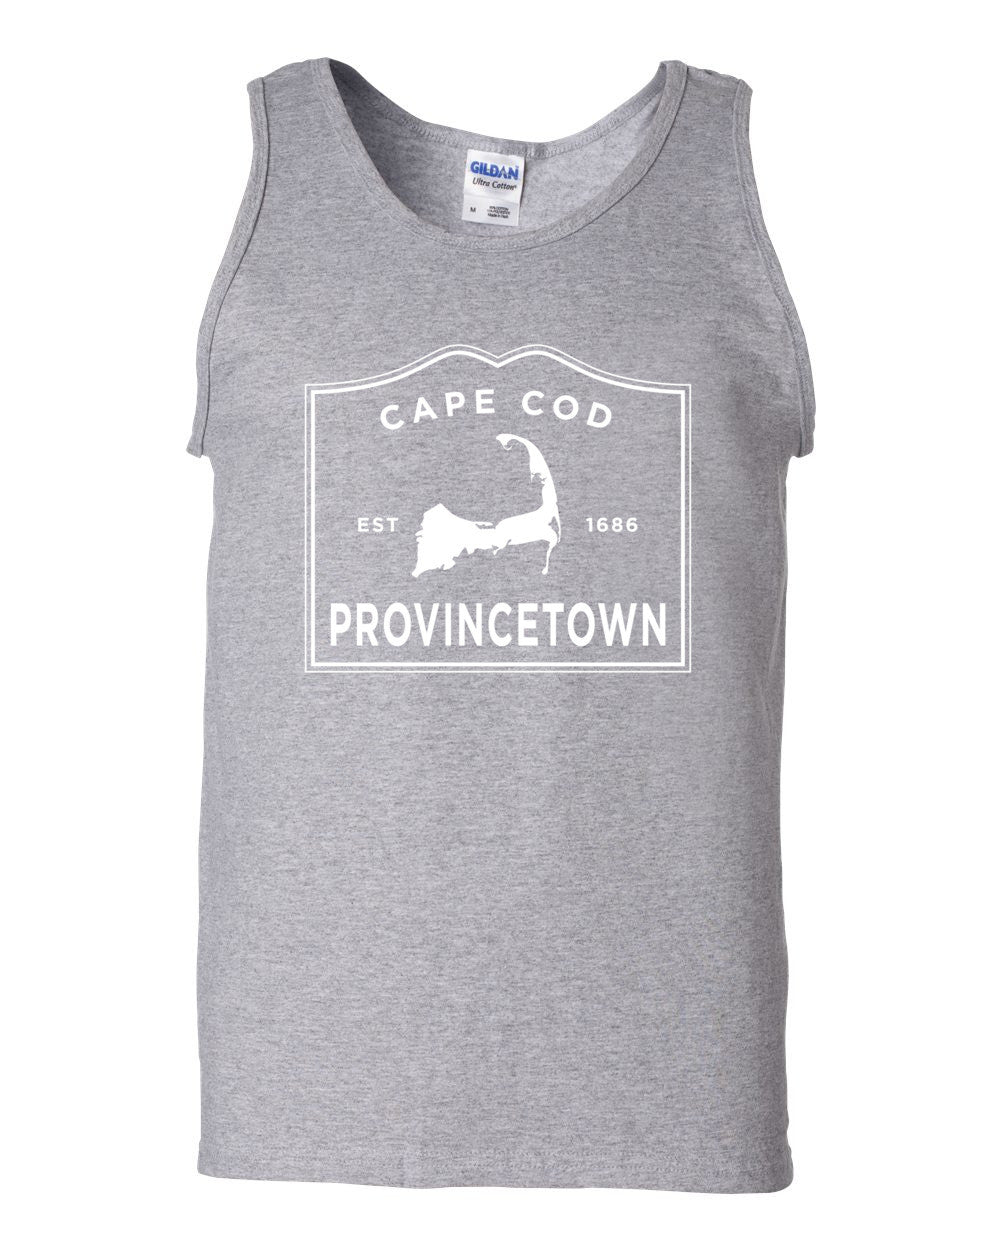 Provincetown Cape Cod Tank Top